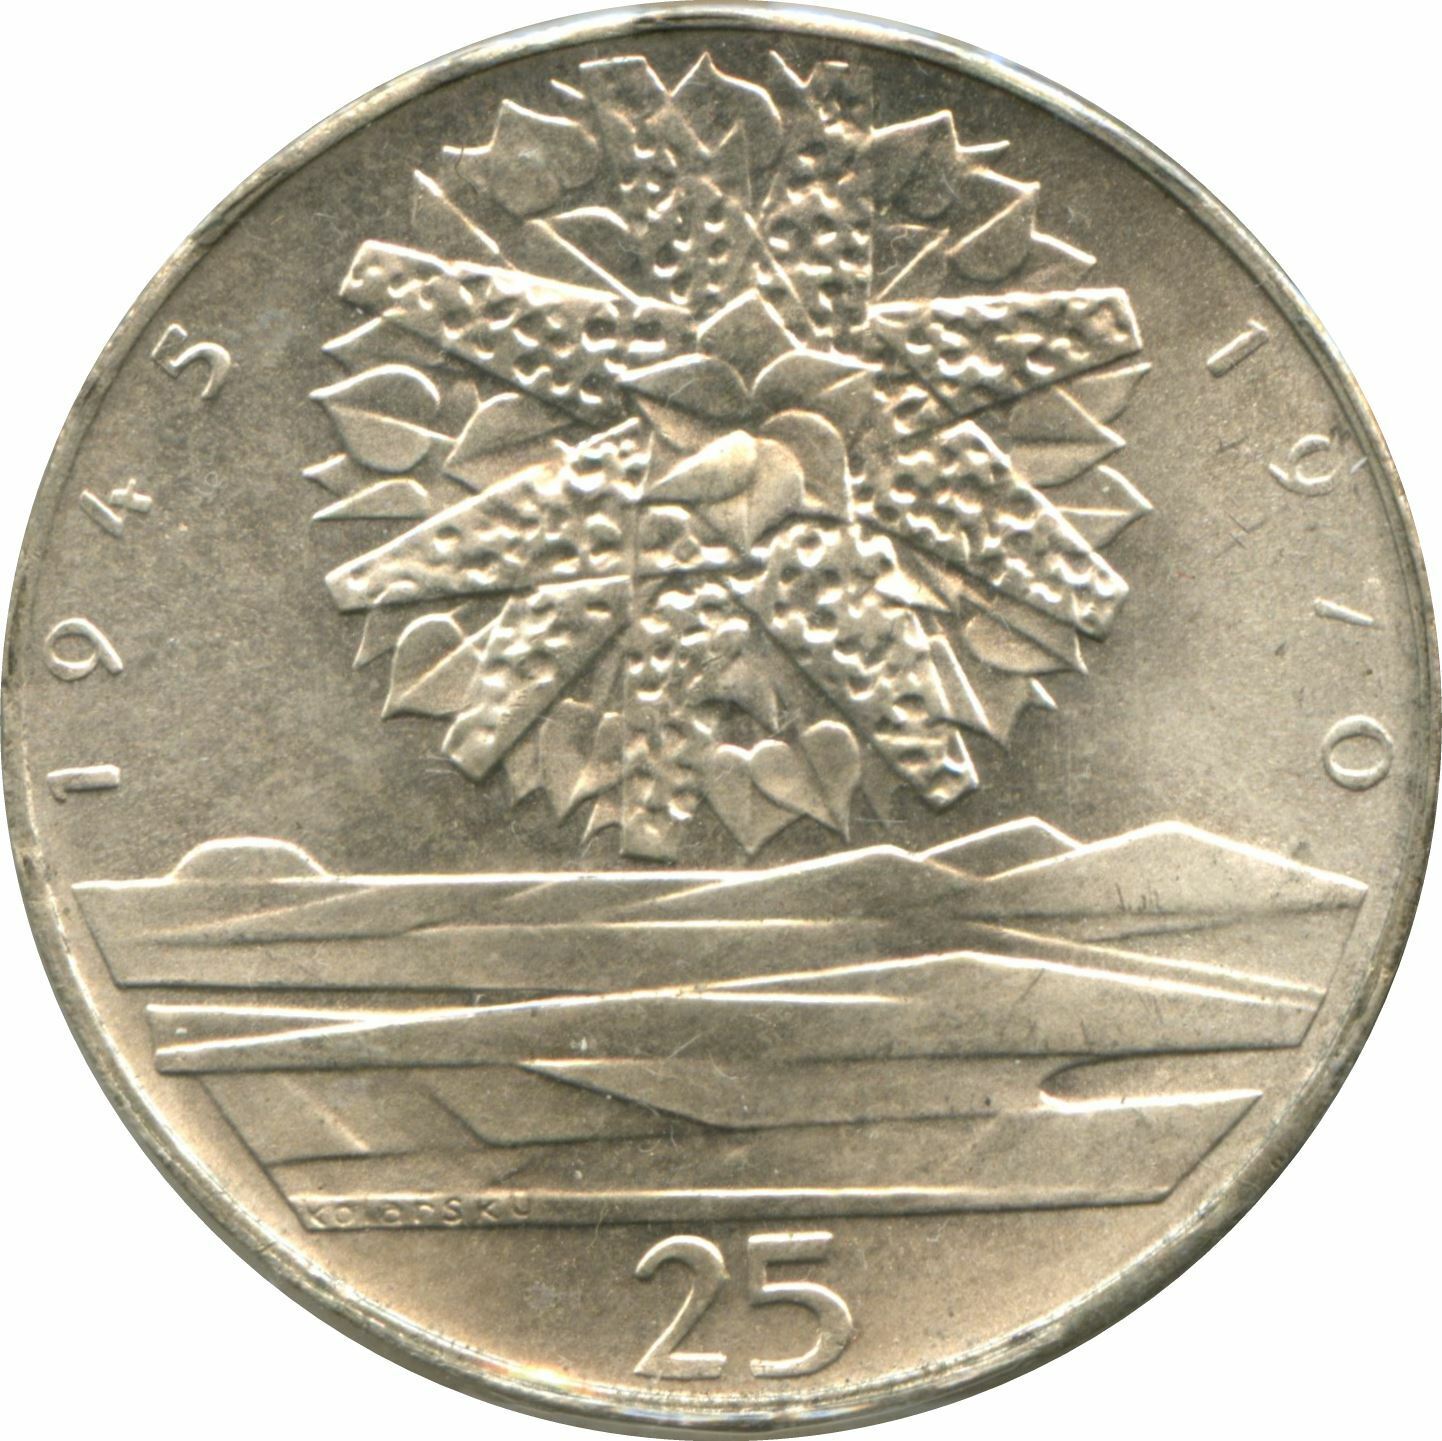 Czechoslovak Coin 25 Korun | Czech Liberation | Czechoslovakia | 1970